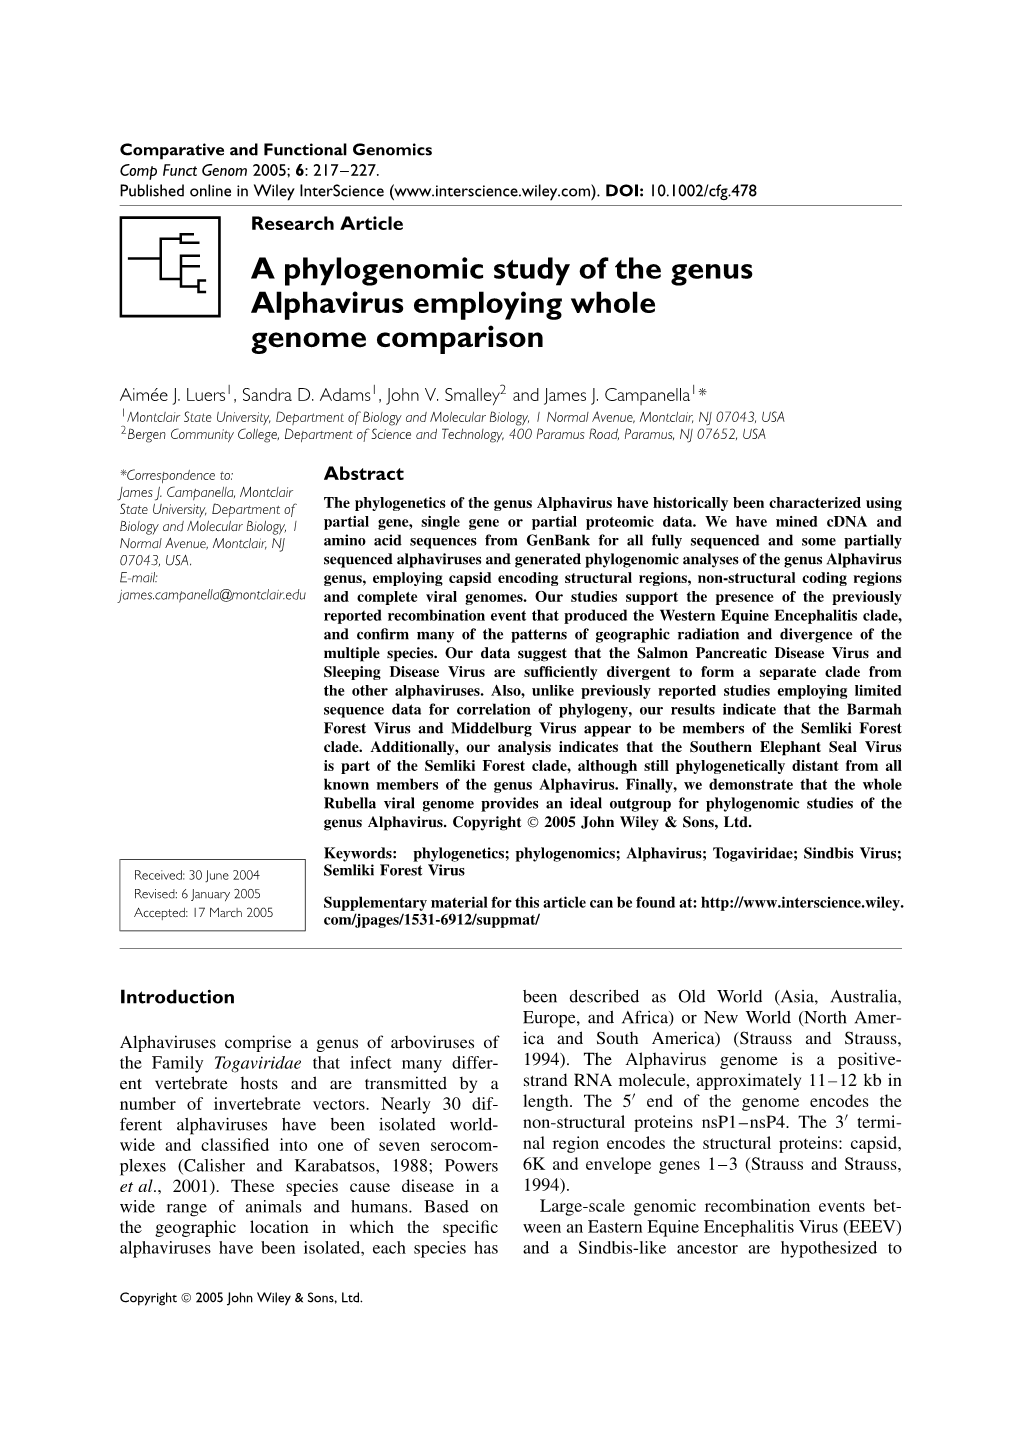 A Phylogenomic Study of the Genus Alphavirus Employing Whole Genome Comparison